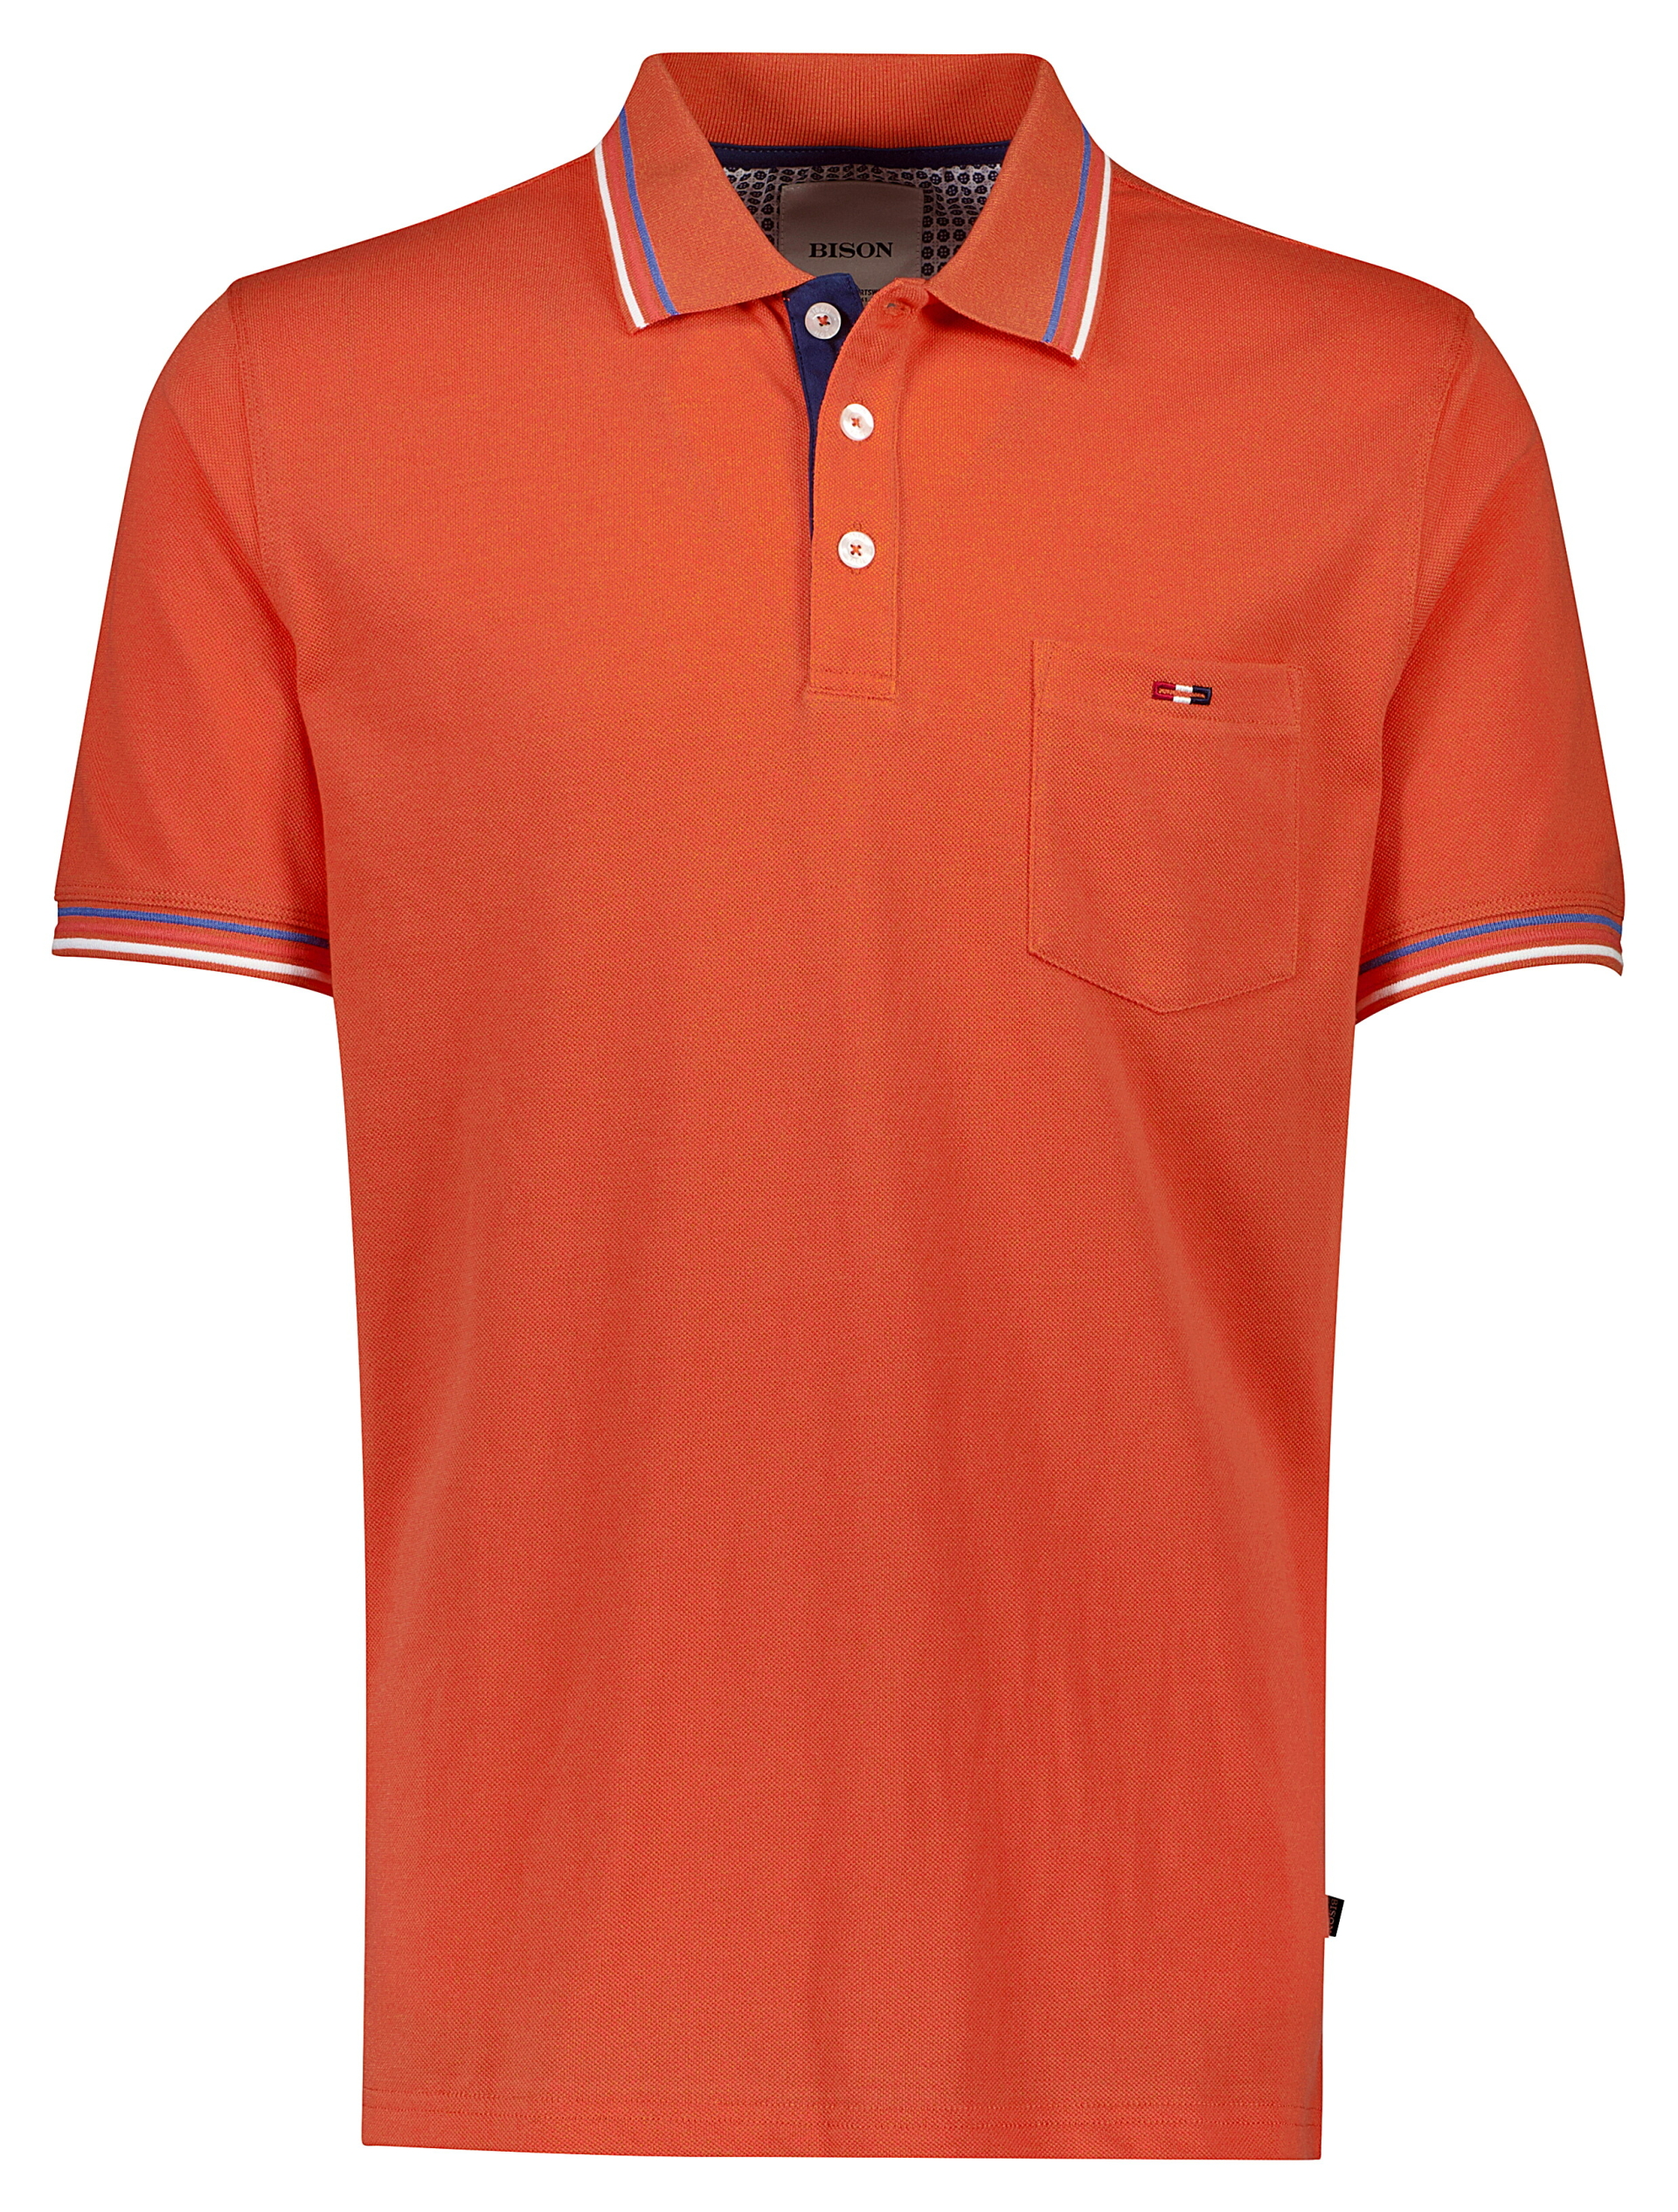 Bison Poloshirt orange / lt orange